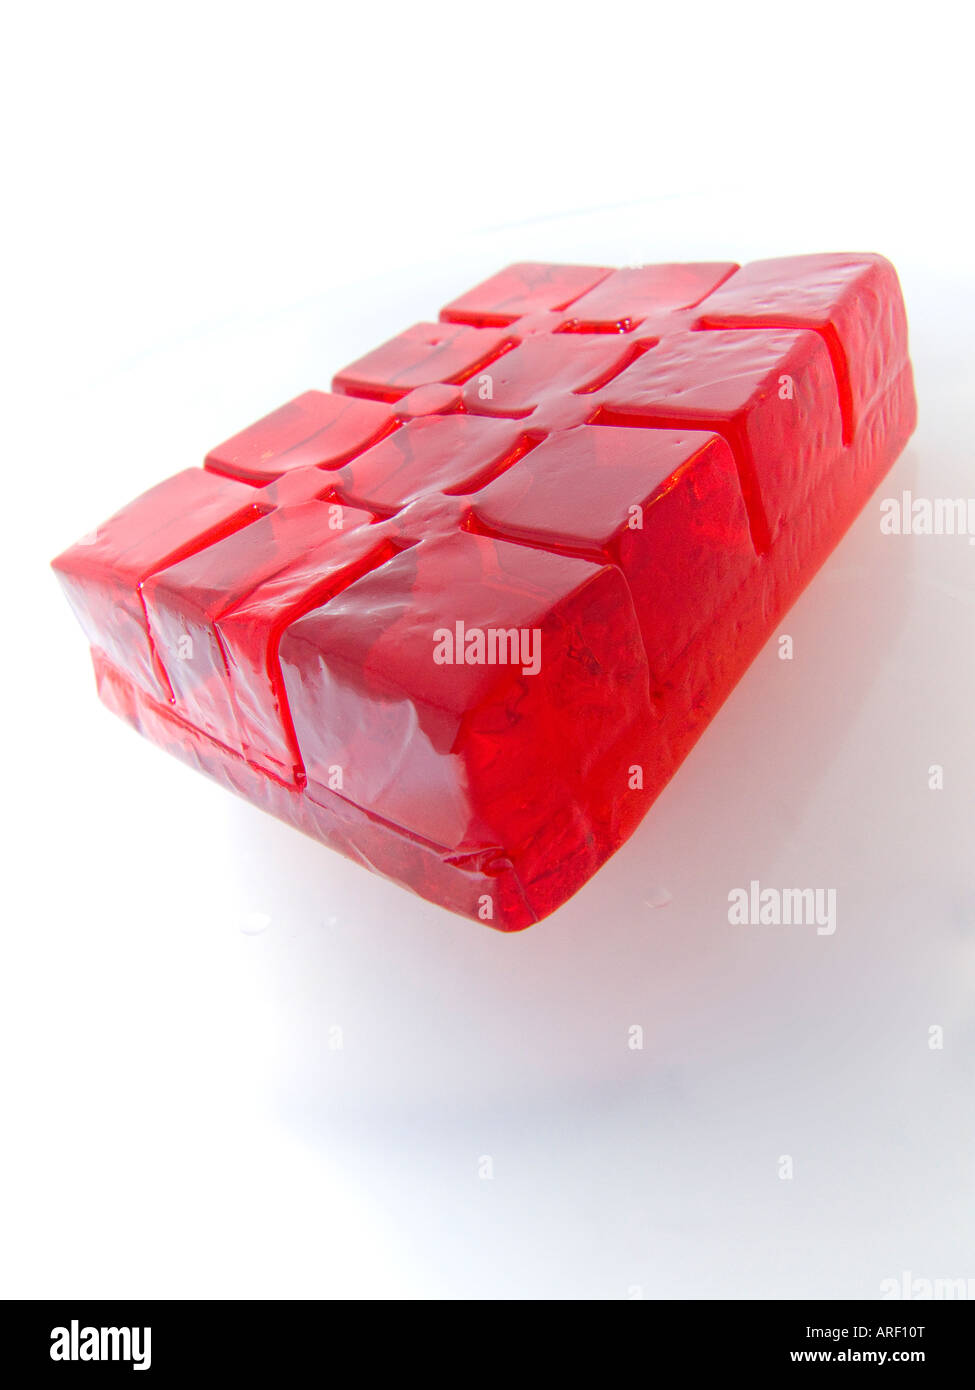 Un blocco di gelatina rossa Foto Stock